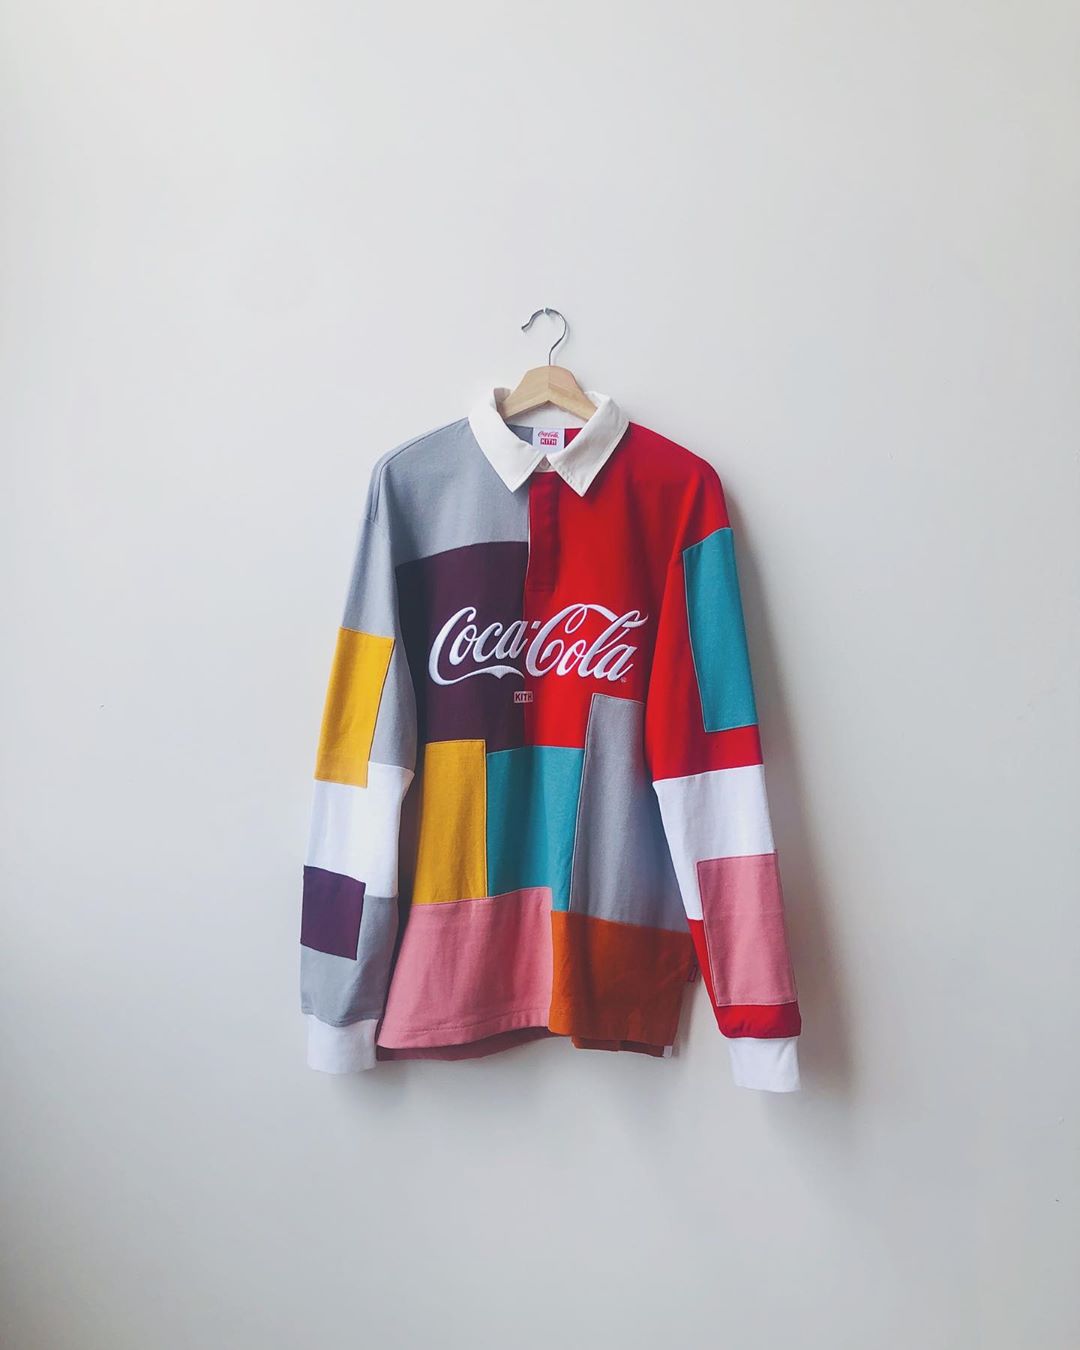 Coca-Cola x Kith Capsule Collection 2019